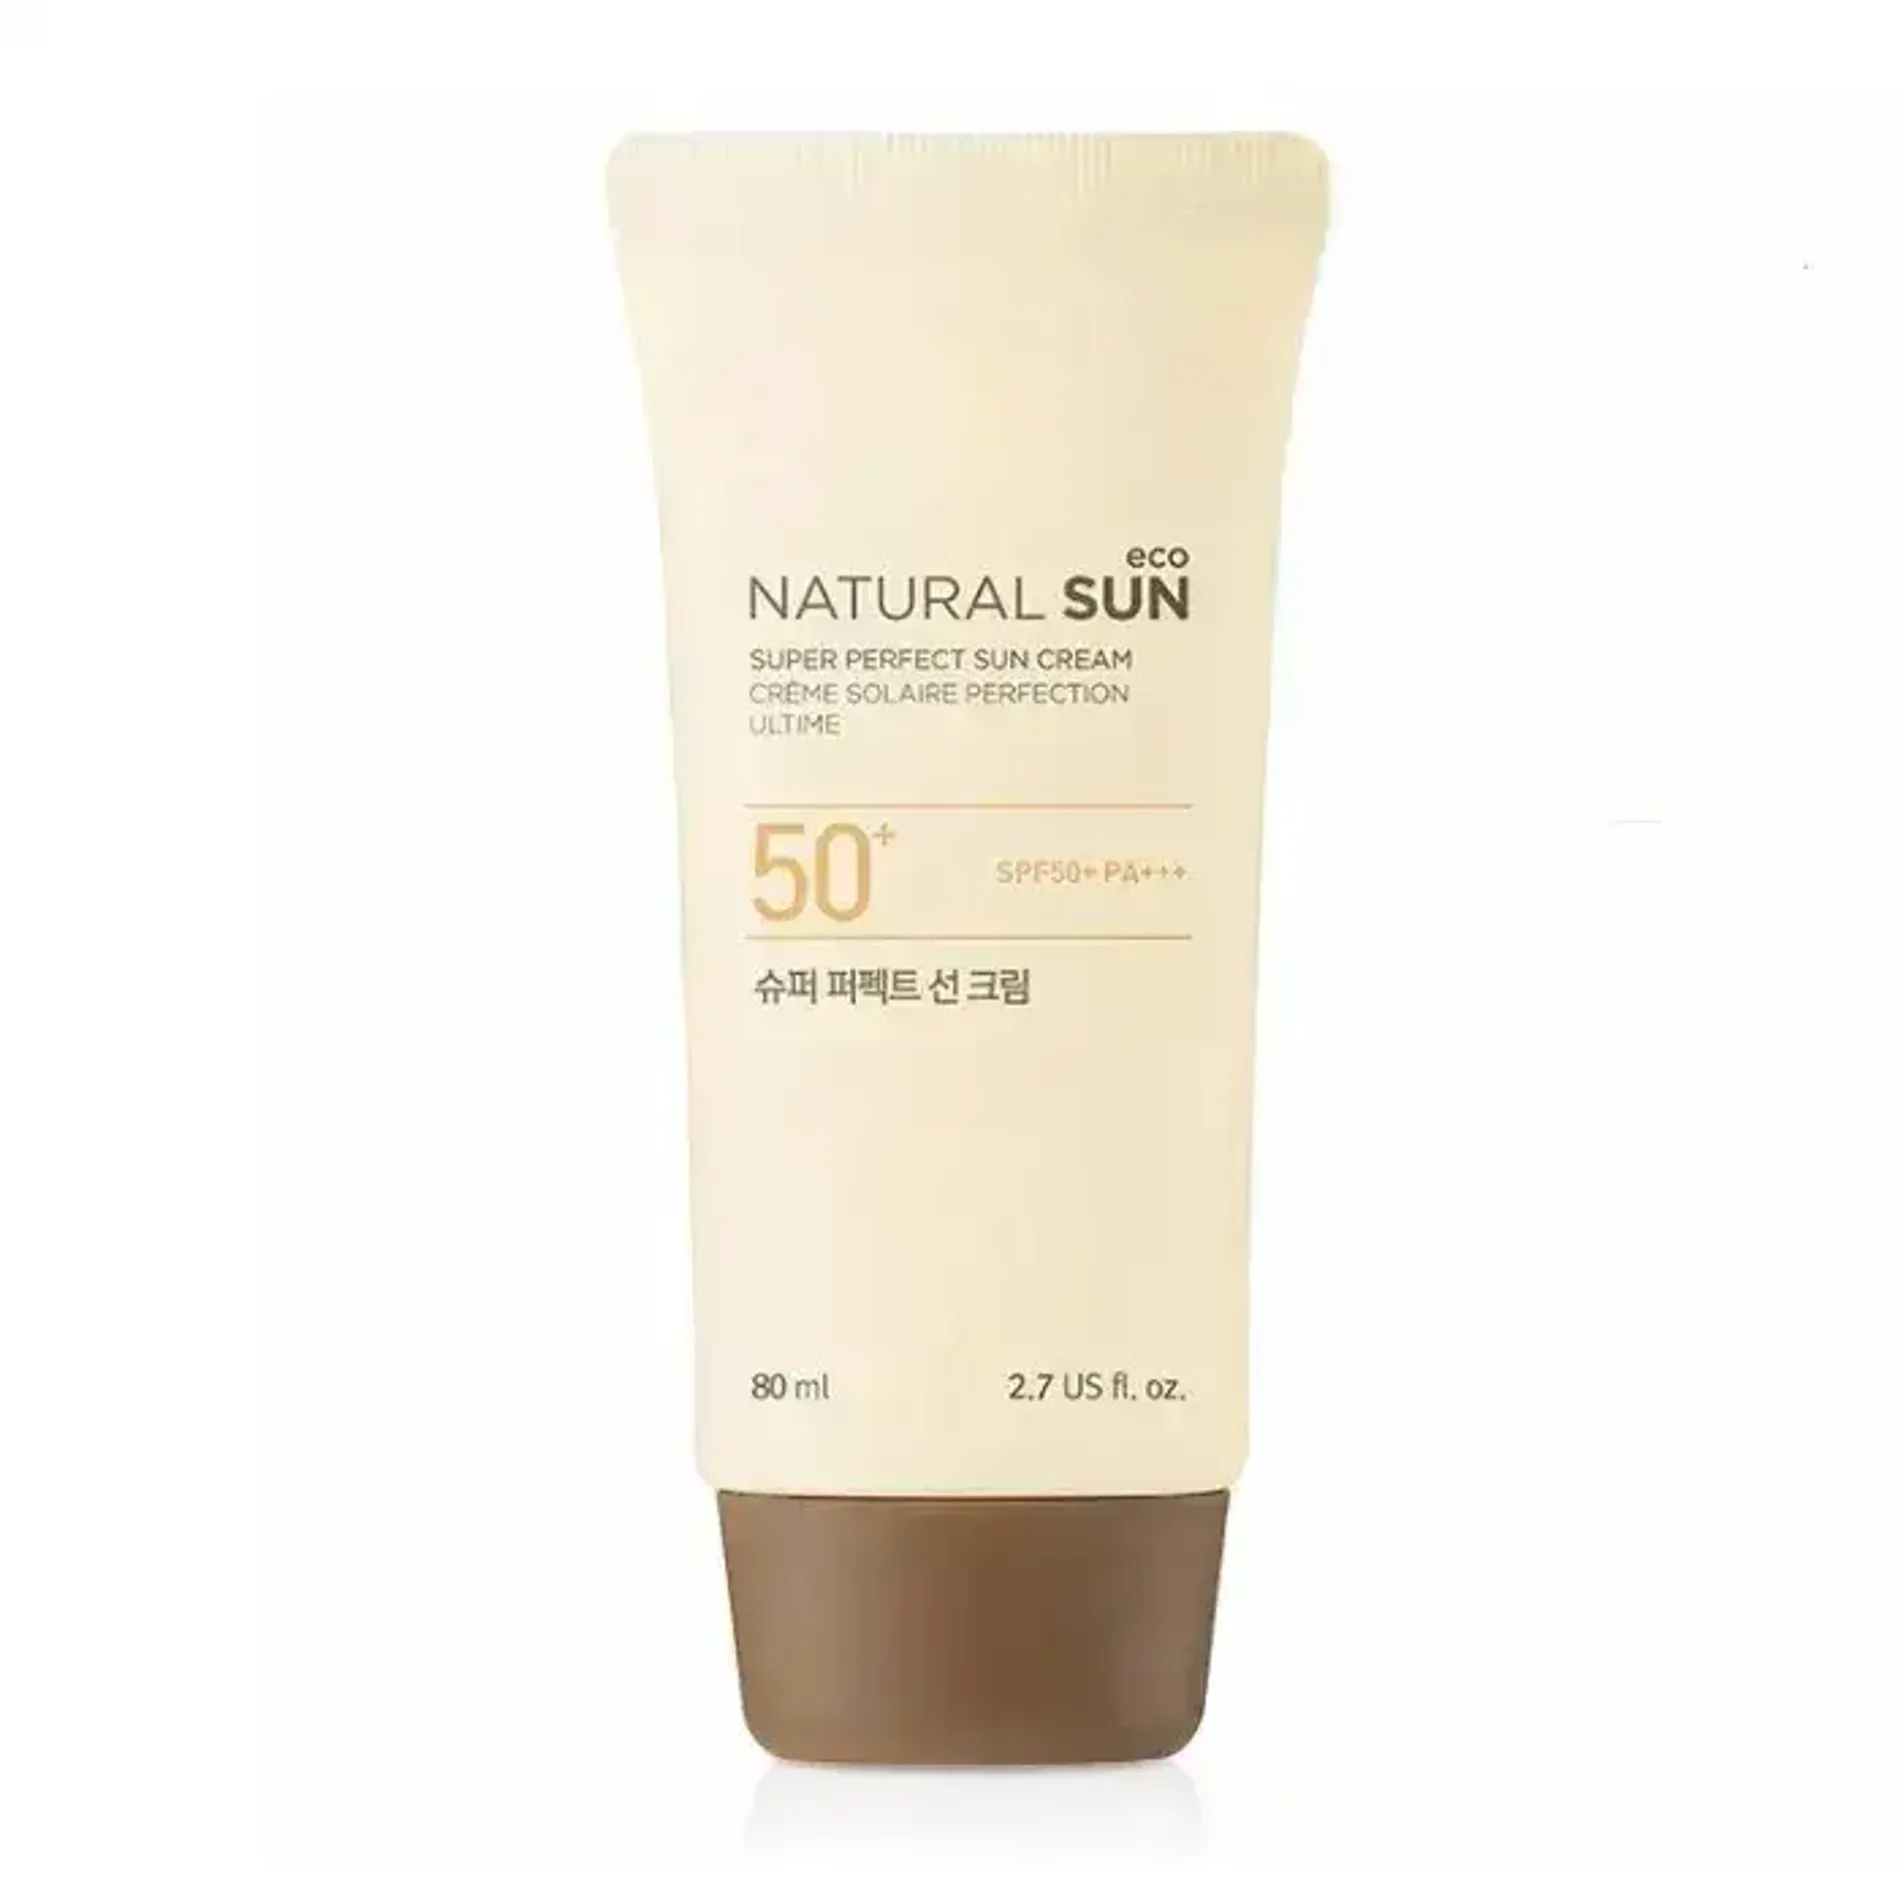 kem-chong-nang-natural-sun-eco-super-perfect-sun-cream-50-pa-80ml-1